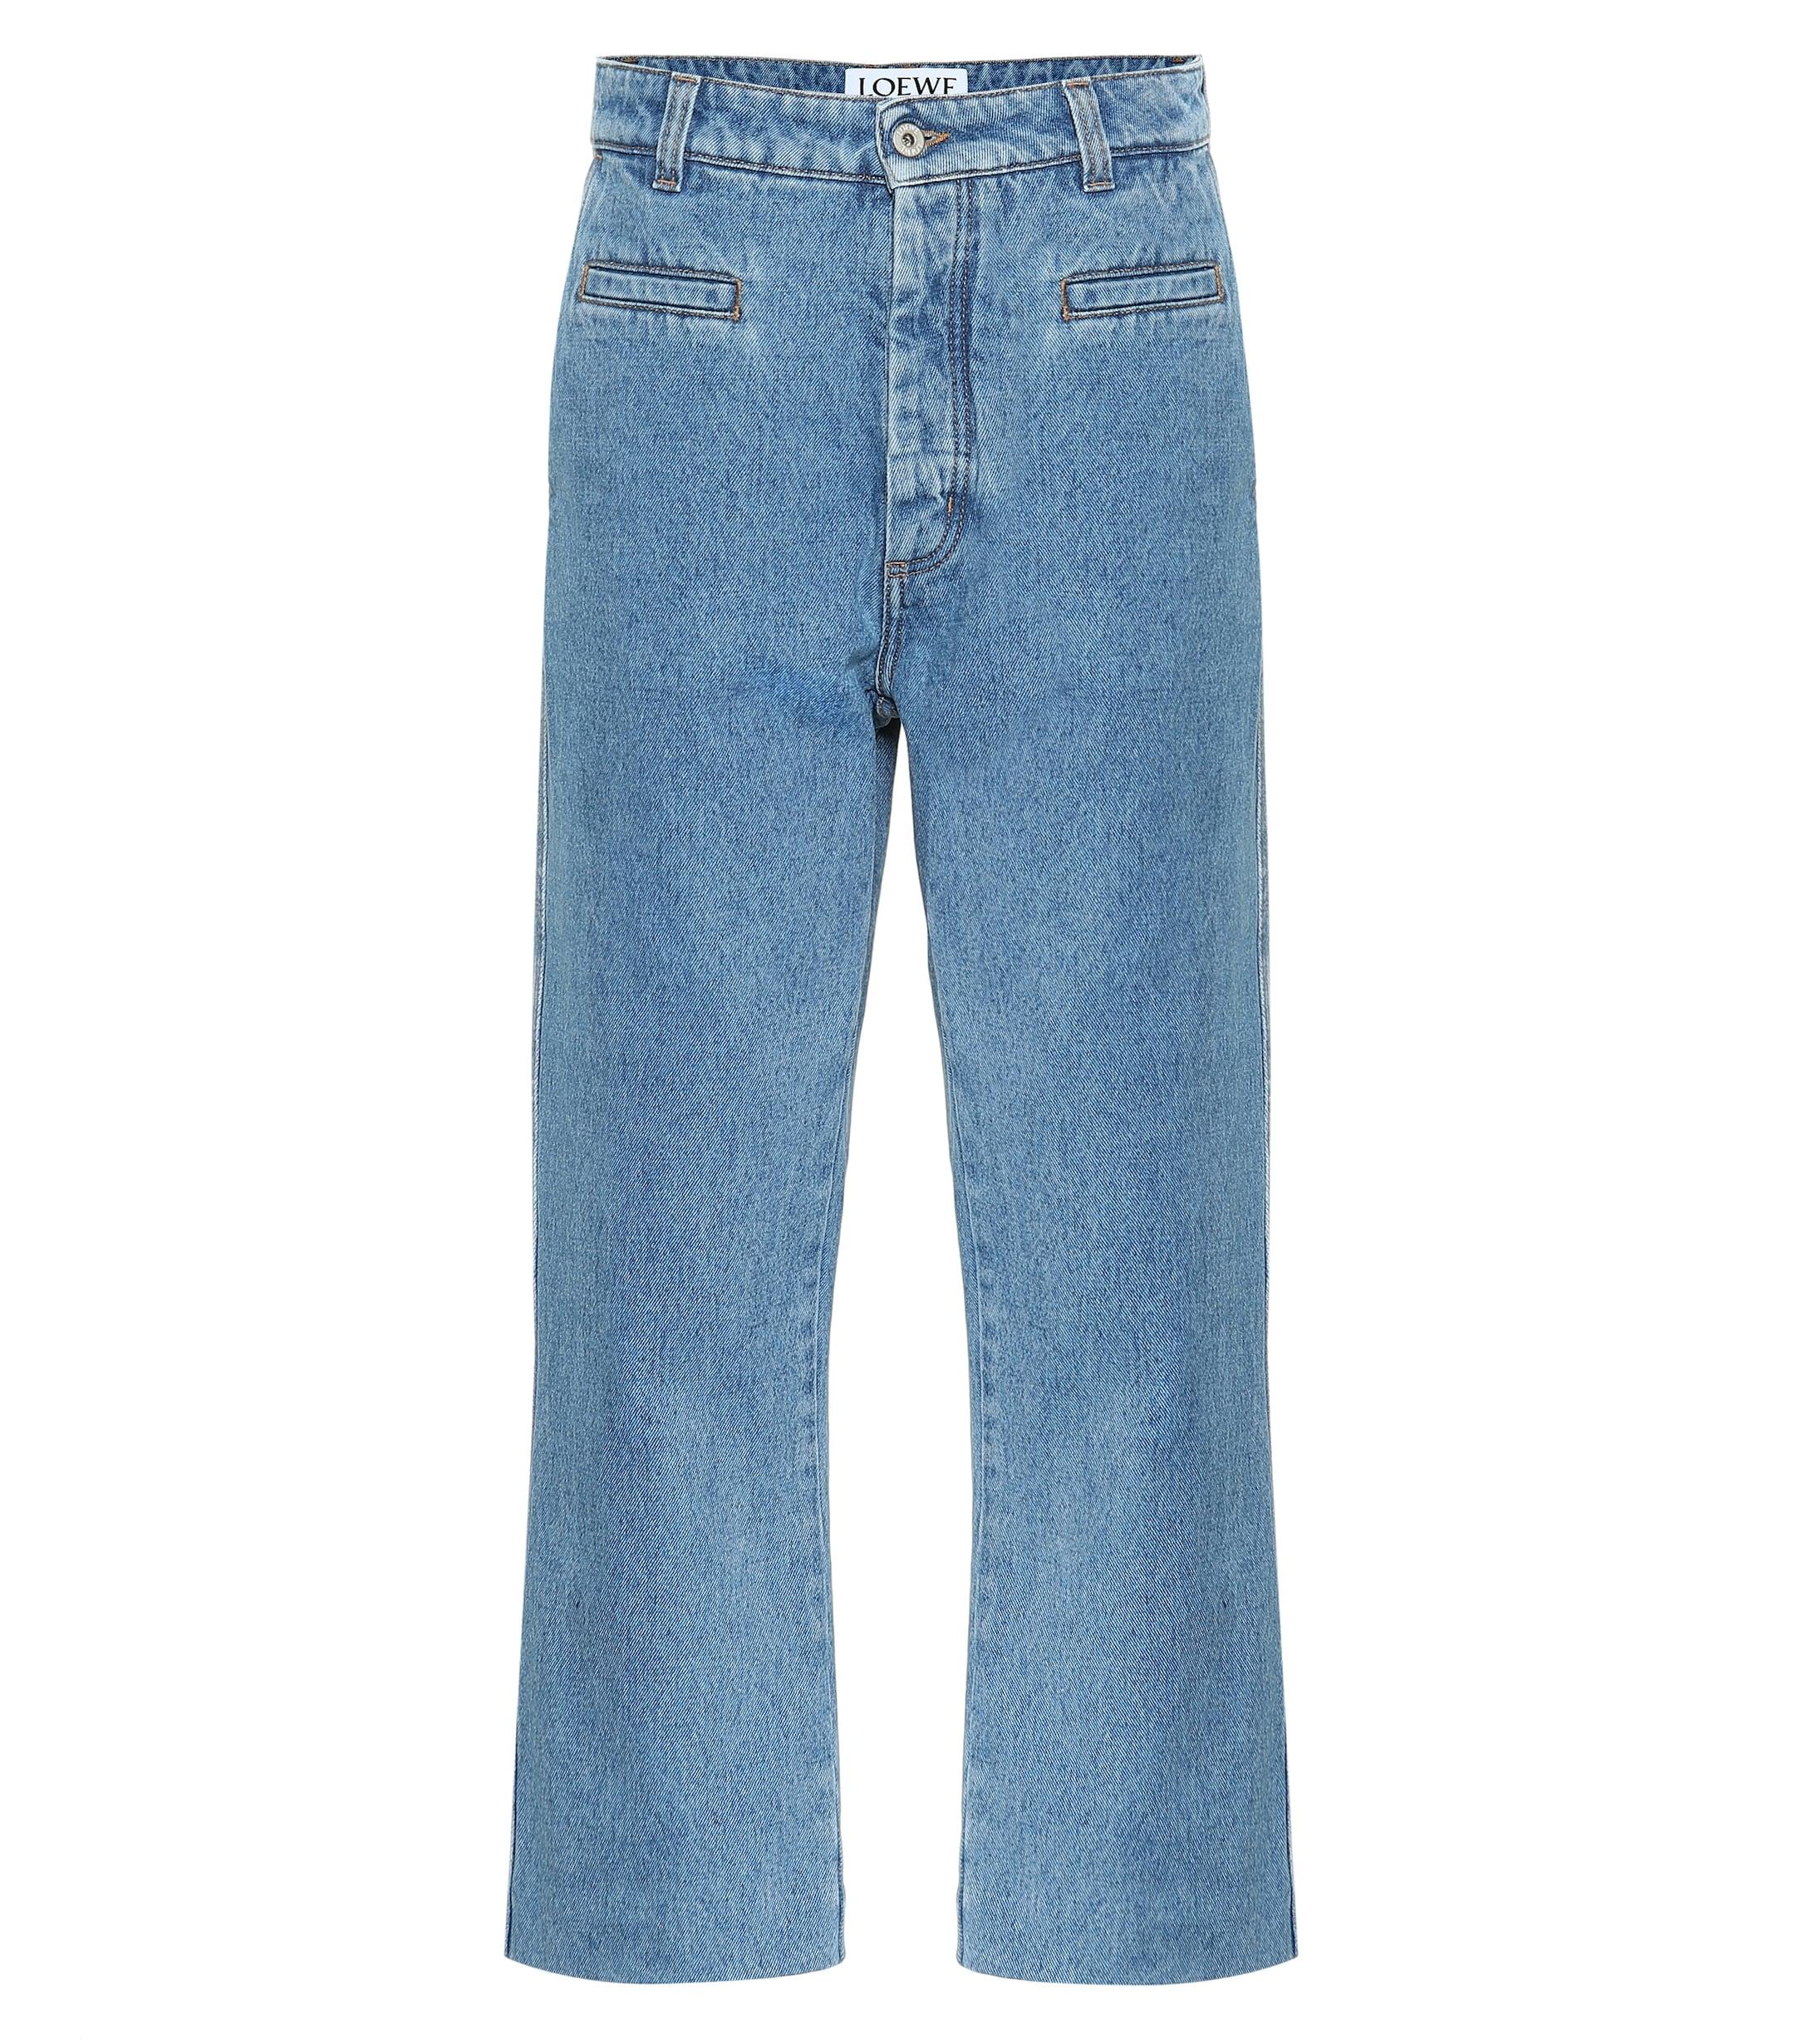 Loewe Denim Cropped High-rise Wide-leg Jeans in Blue - Lyst